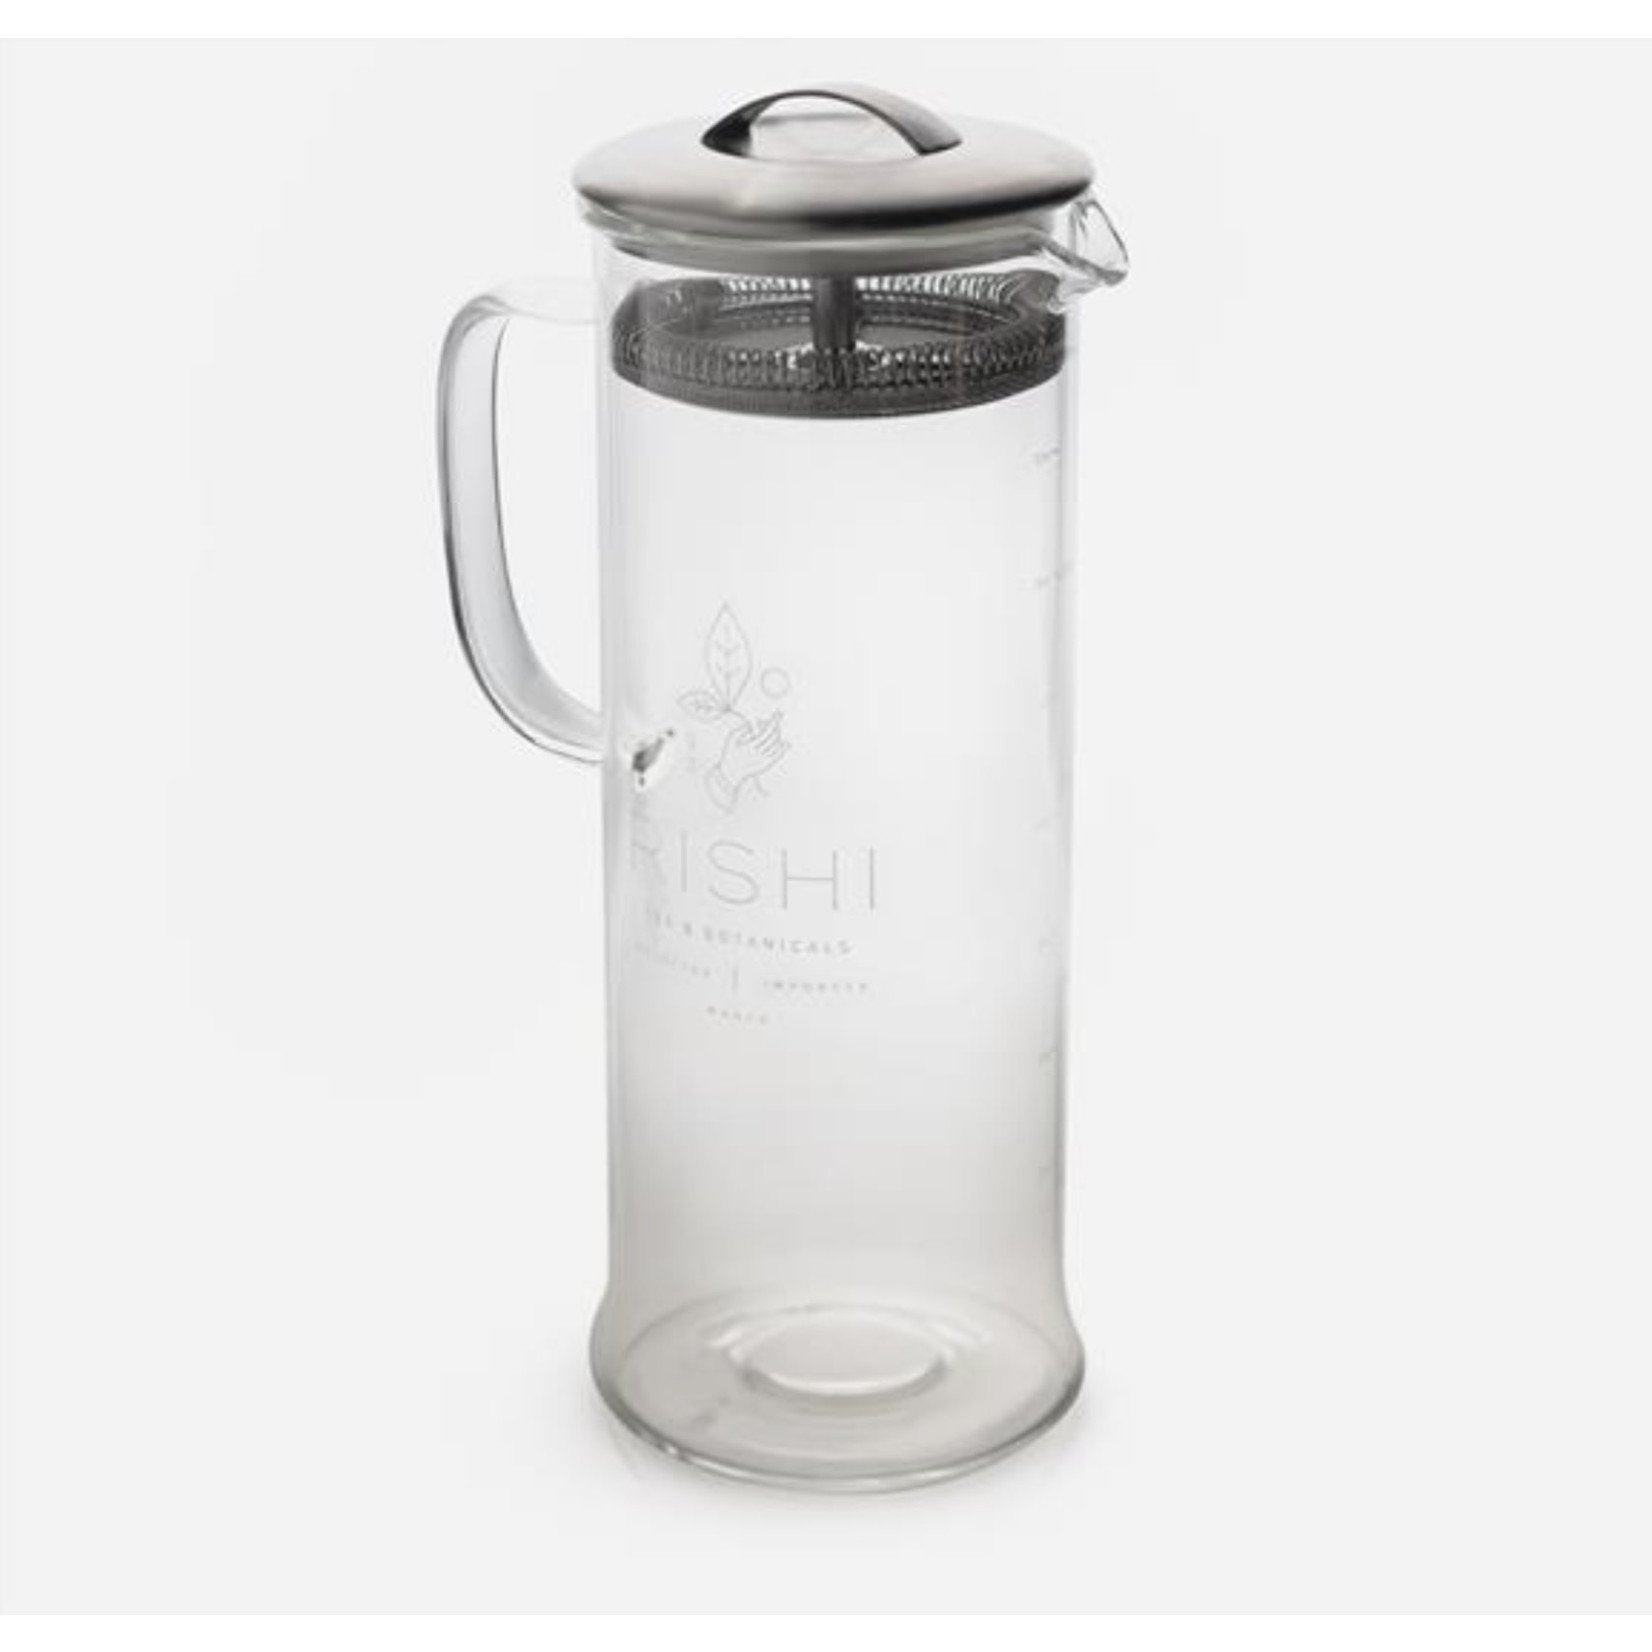 Rishi Rishi Glassware - Simple Brew, Loose Leaf Teapot - 1L